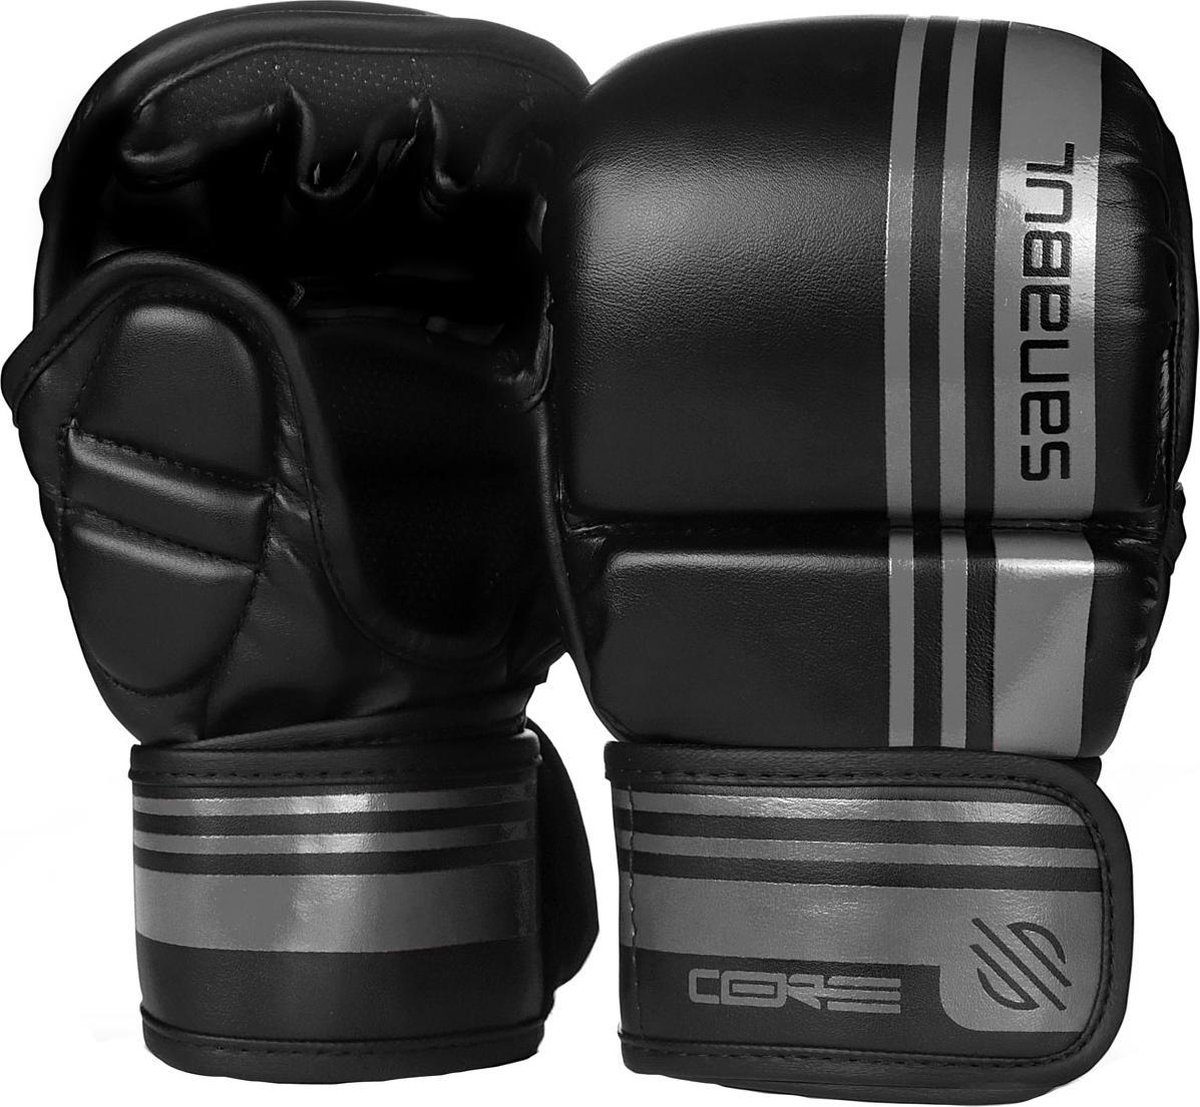 Sanabul Core Series Hybride Handschoenen- 7 oz - zwart en metaal - L/XL